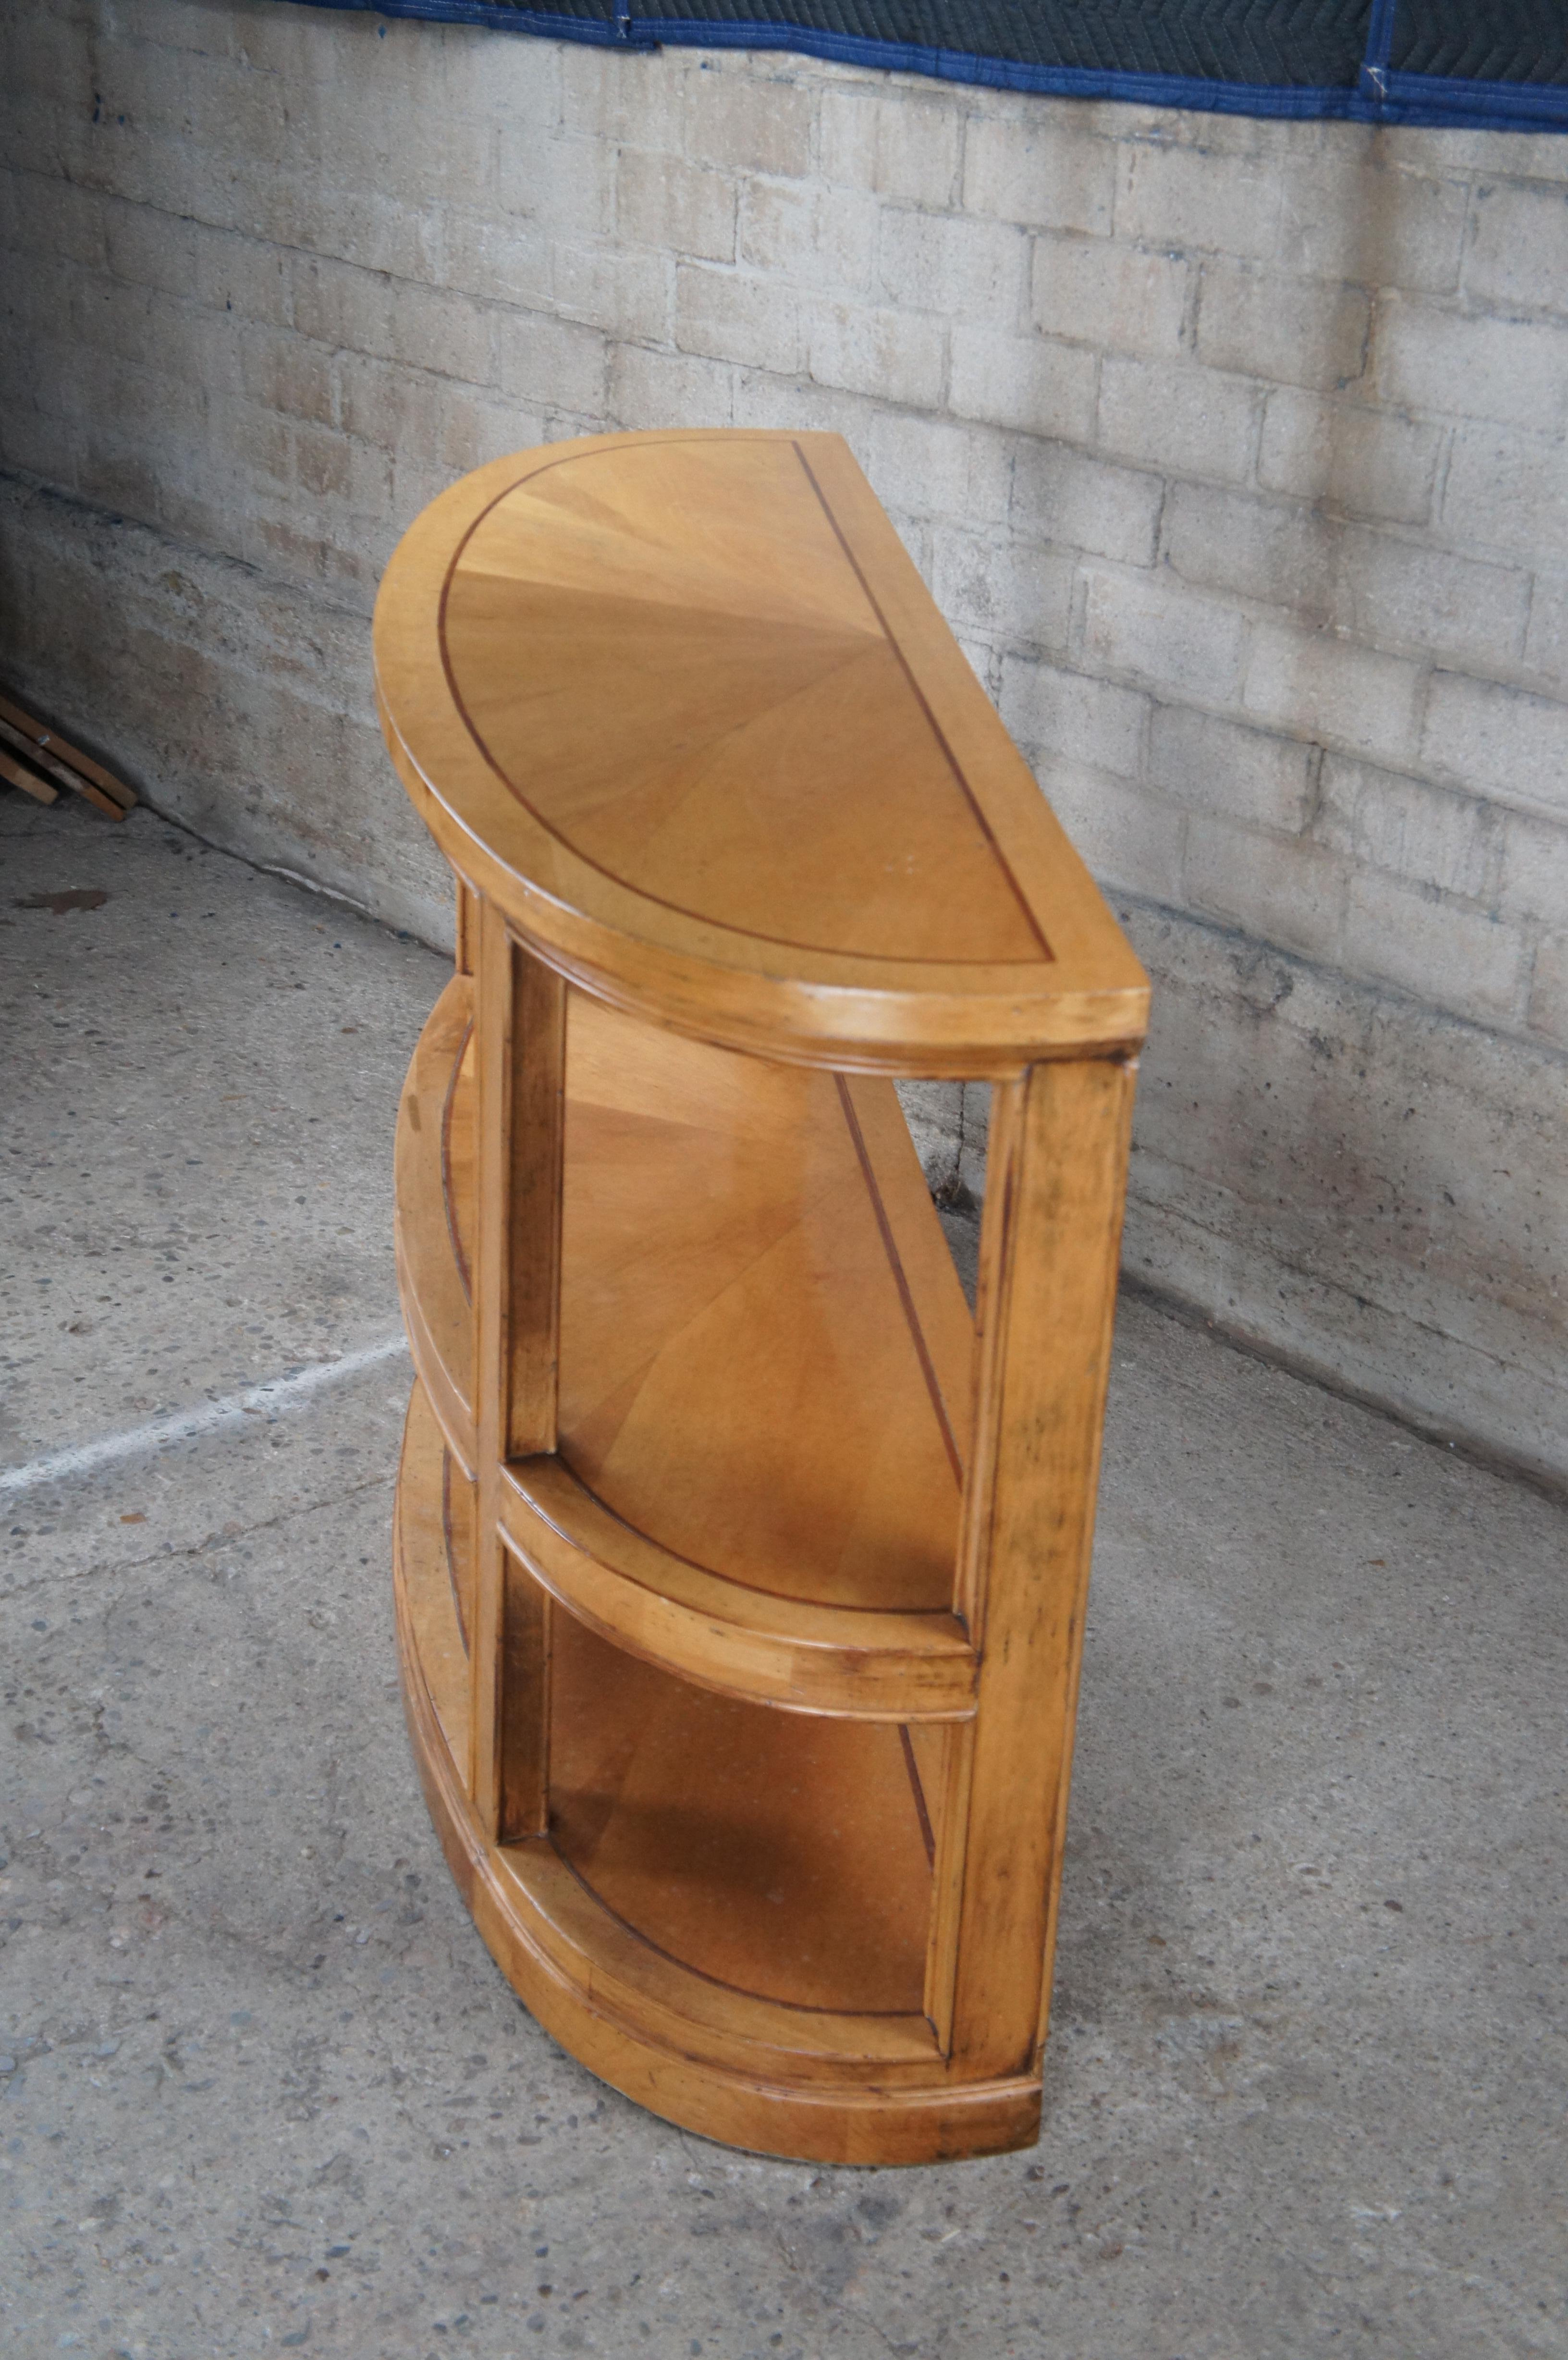 Kravet Furniture Tiered Half Moon Demilune Maple Inlaid Modern Console Table 60